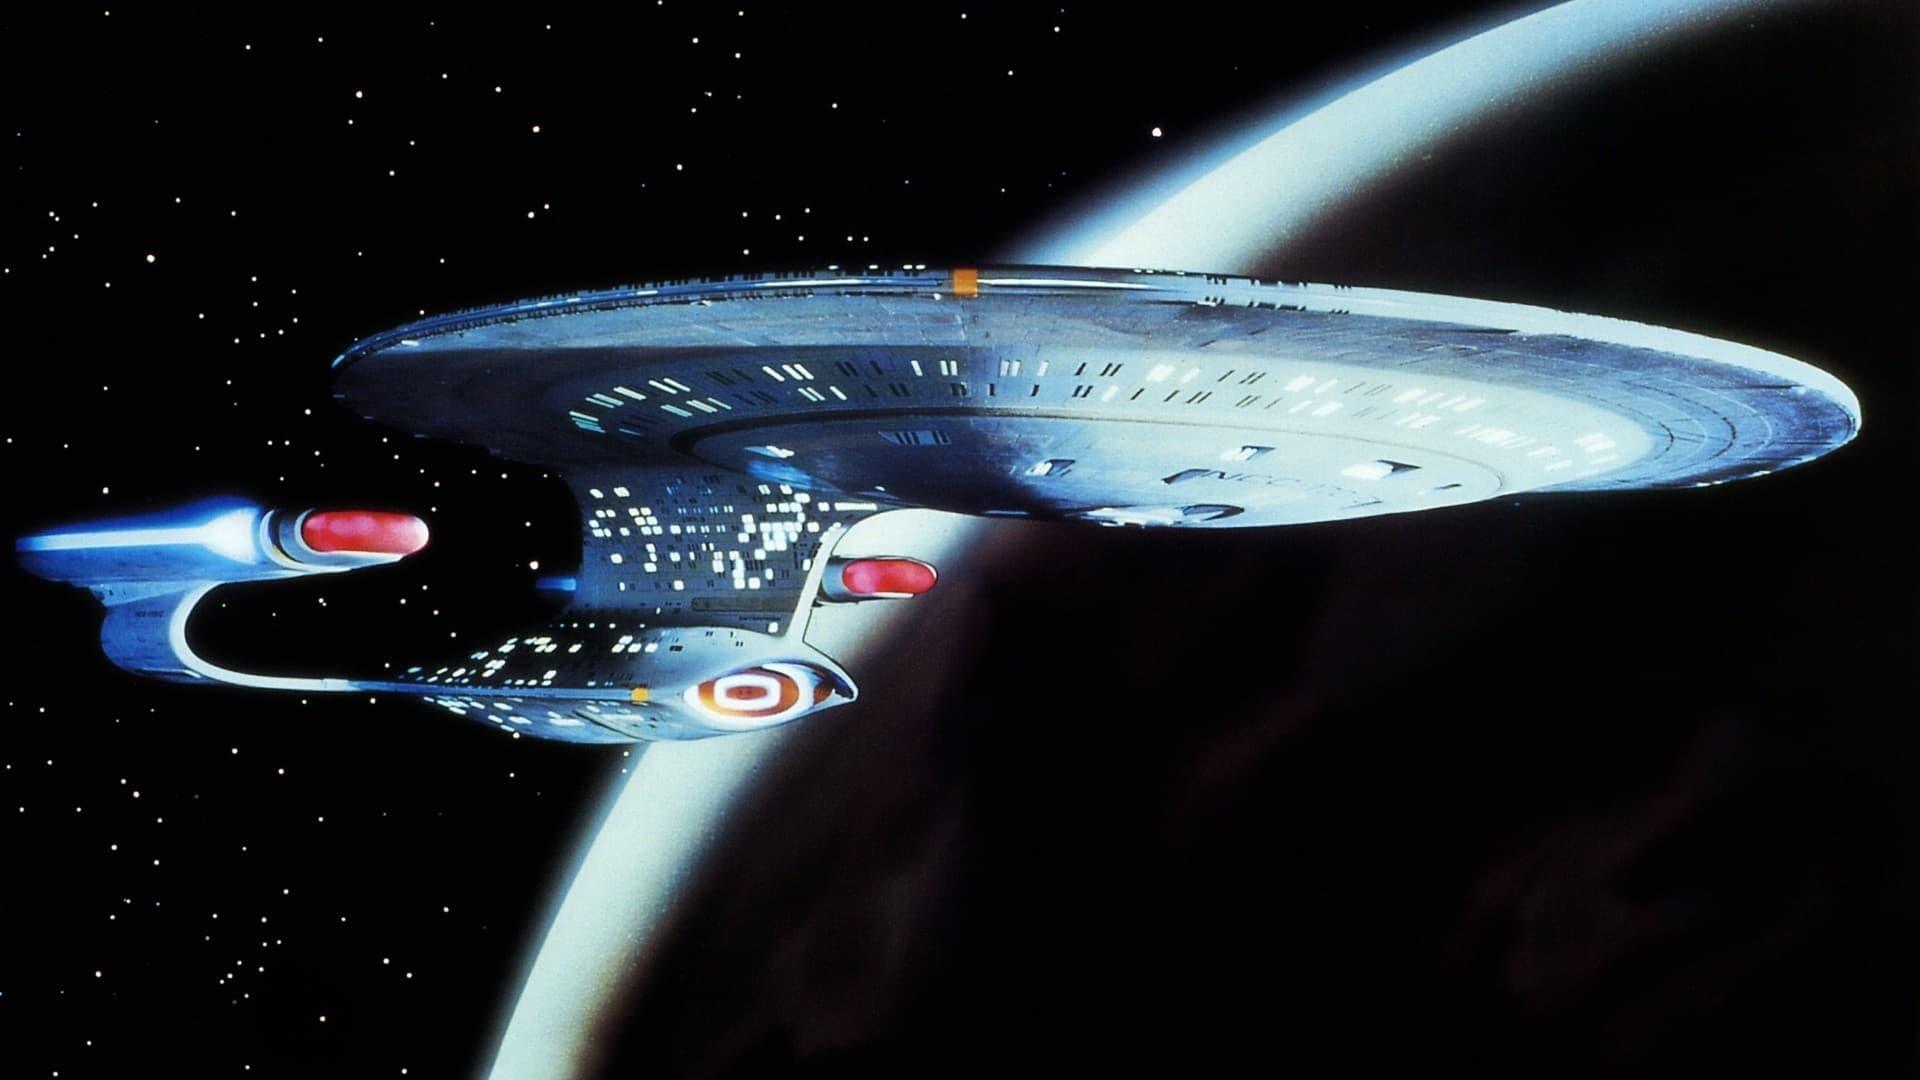 Star Trek: The Next Generation backdrop